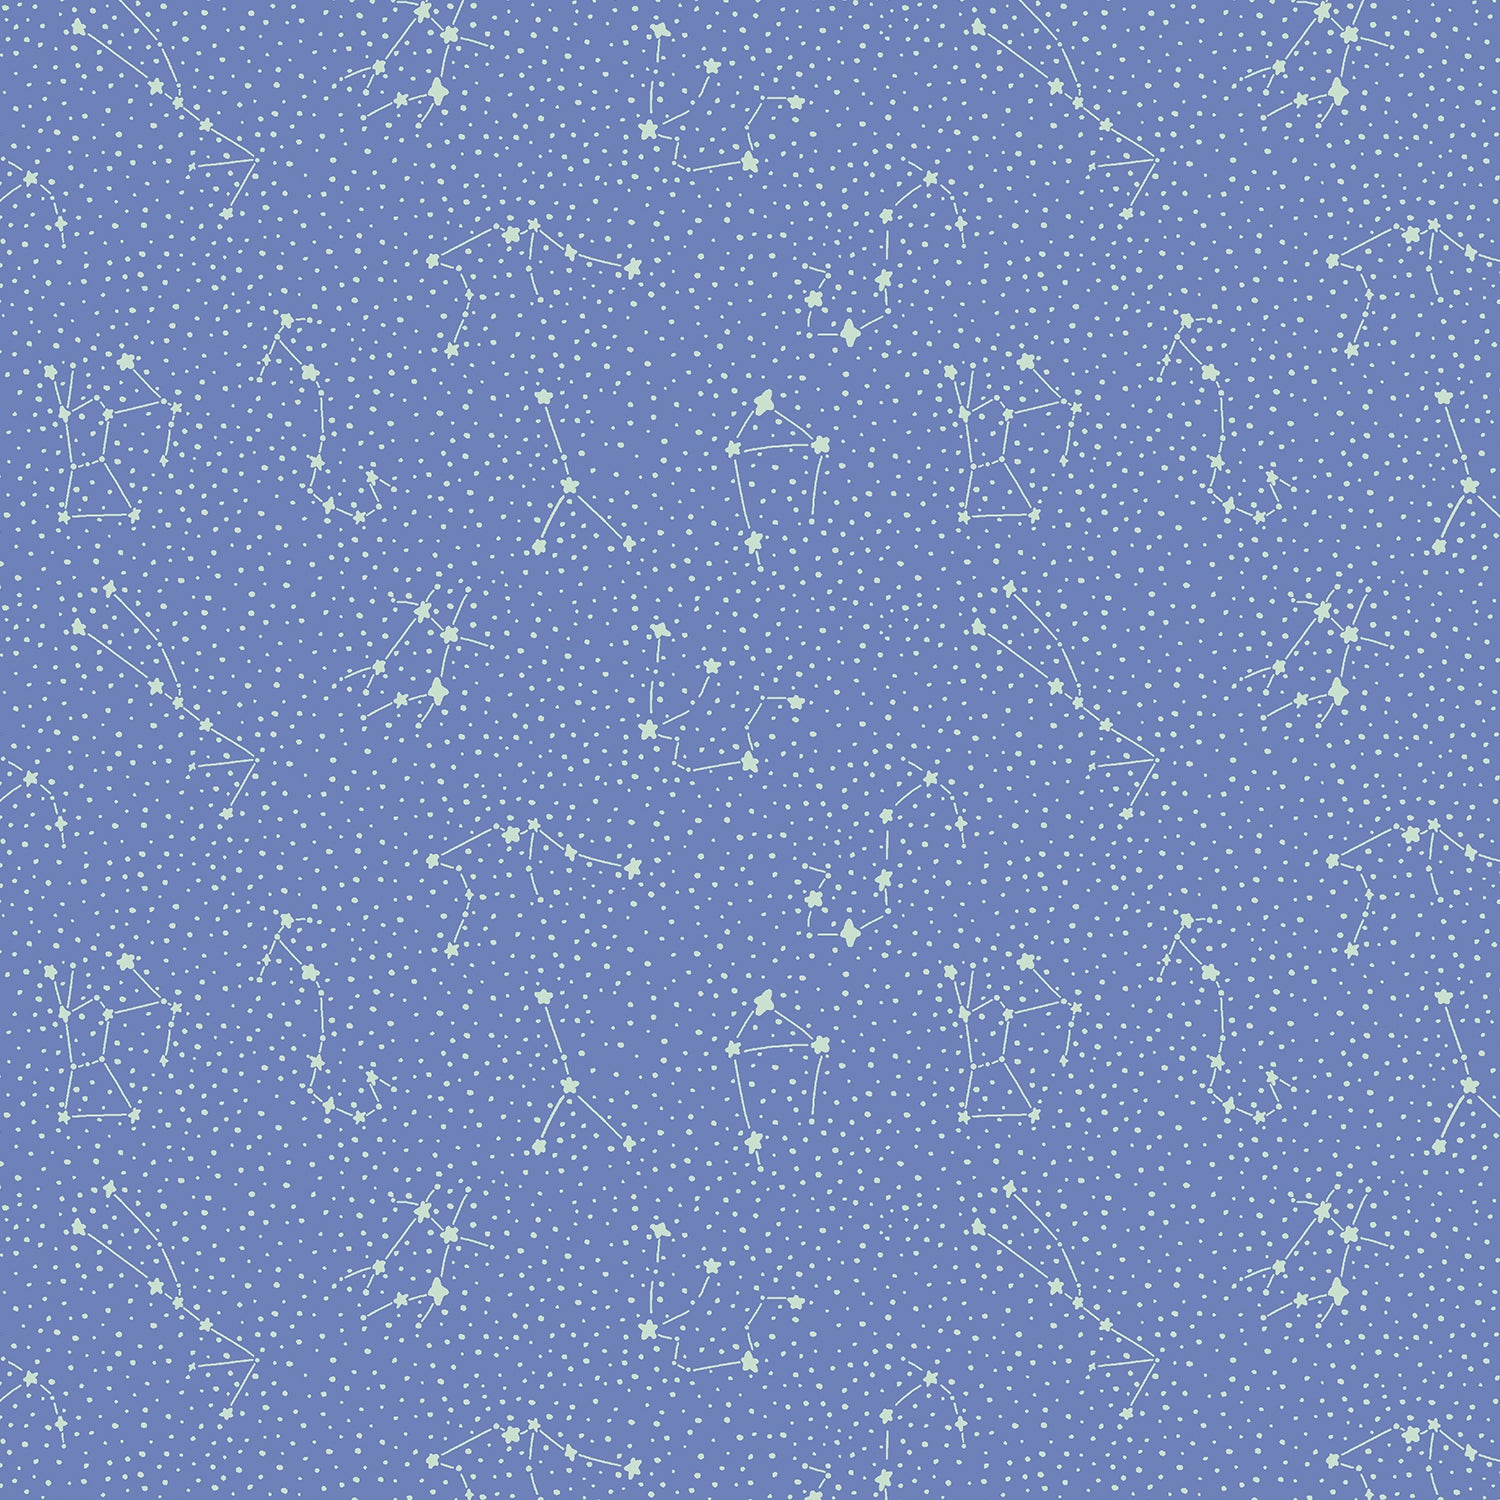 Cosmic Sea - Galaxy - Reflection Fabric